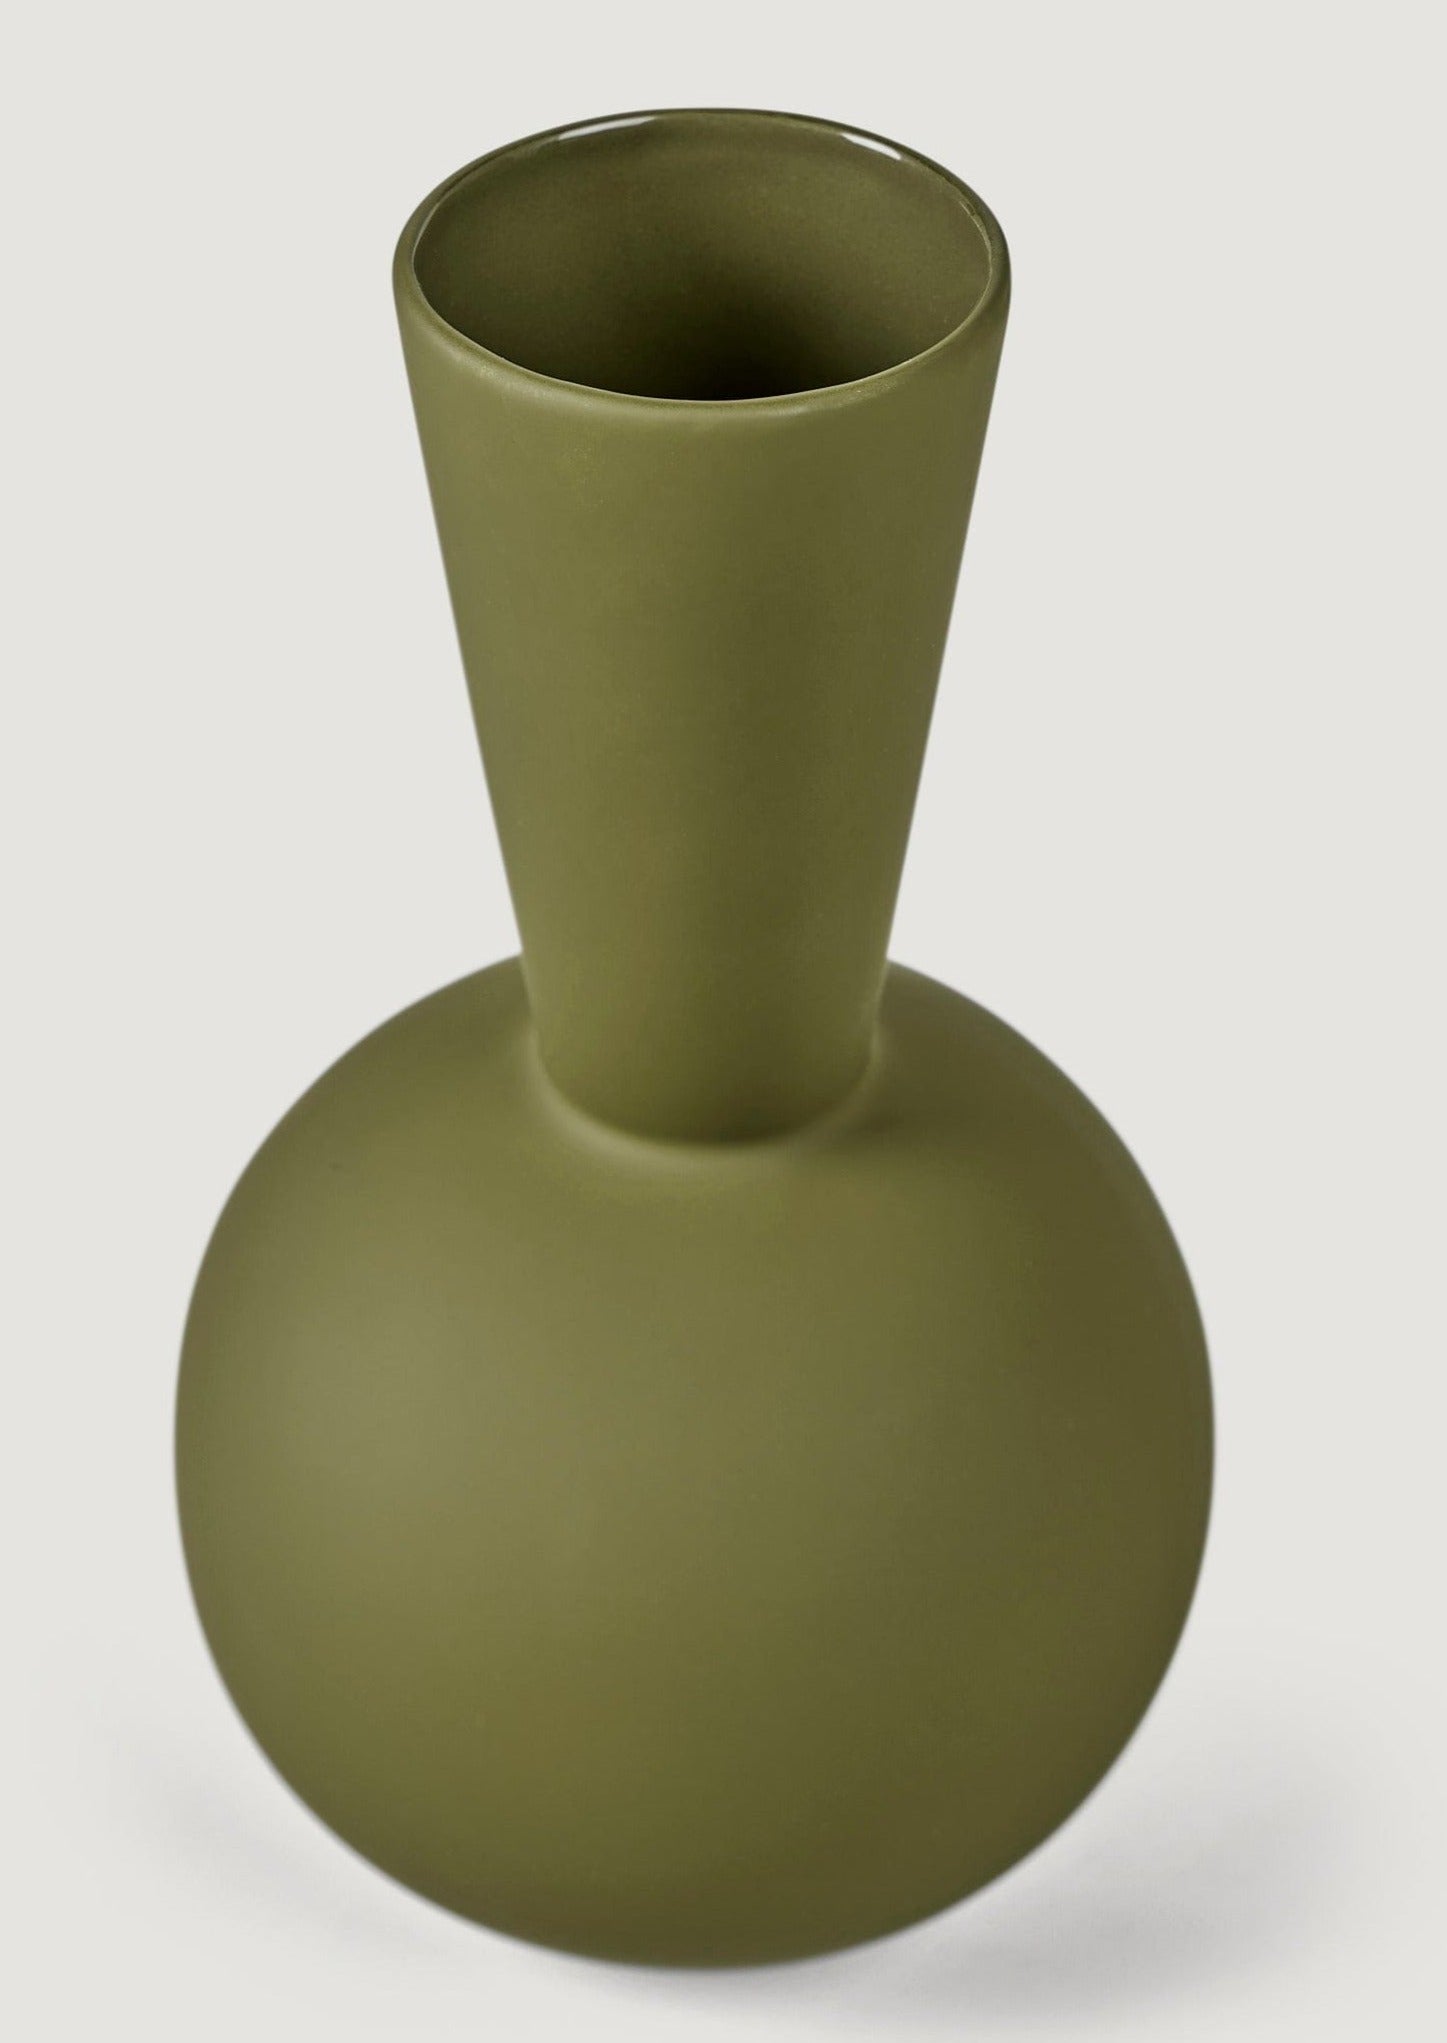 Ceramic Trumpet Vase in Olive Green Closeup View